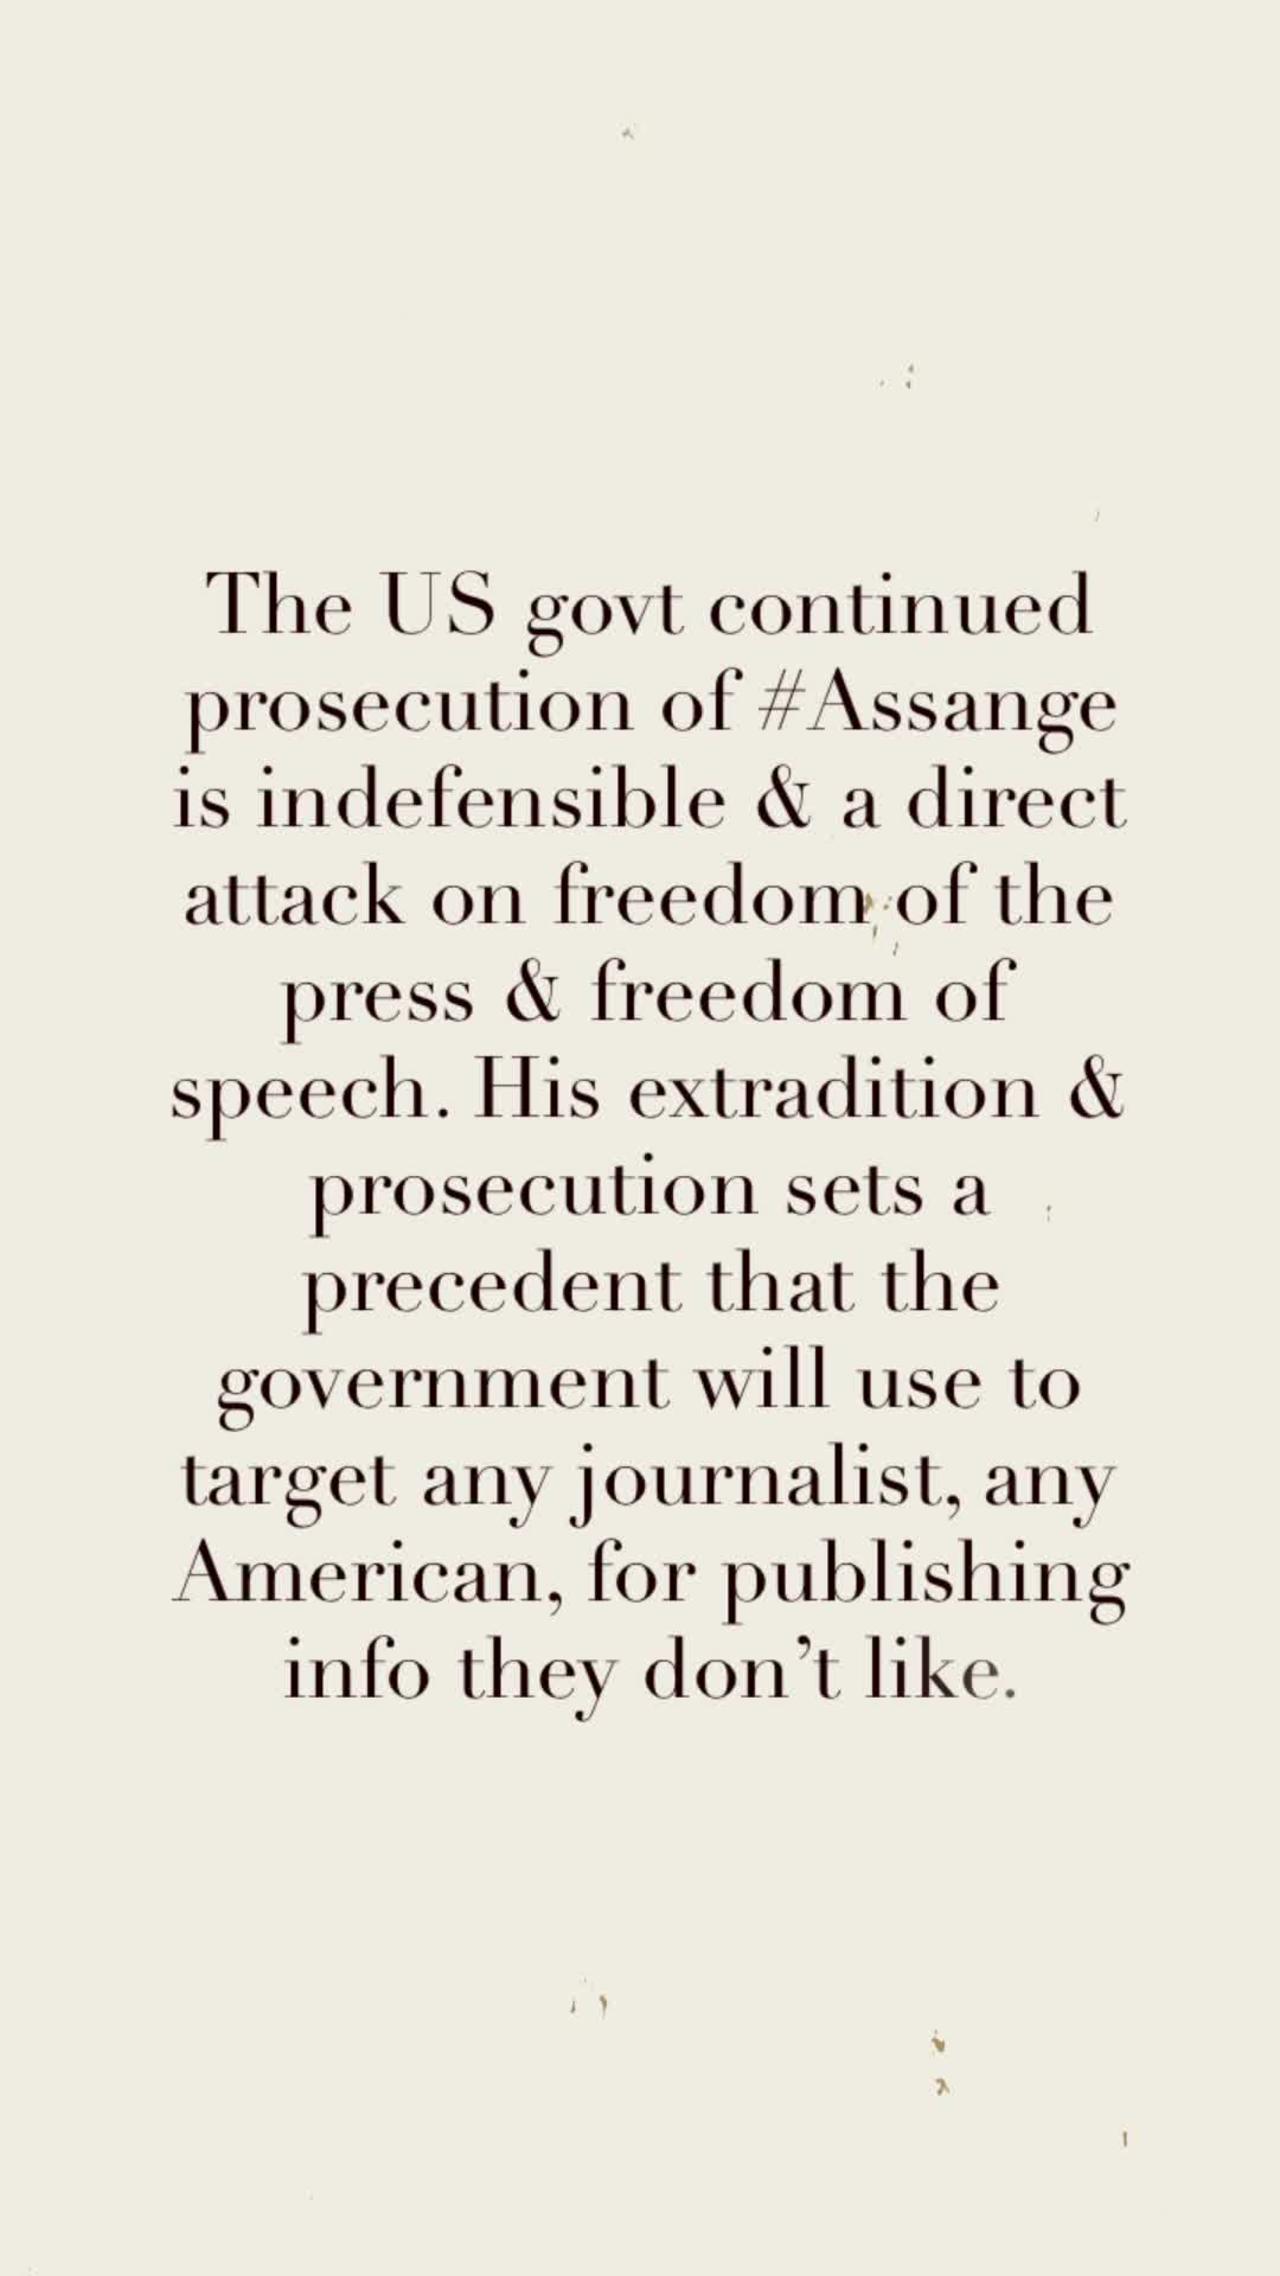 US govt continued prosecution of Assange is indefensible